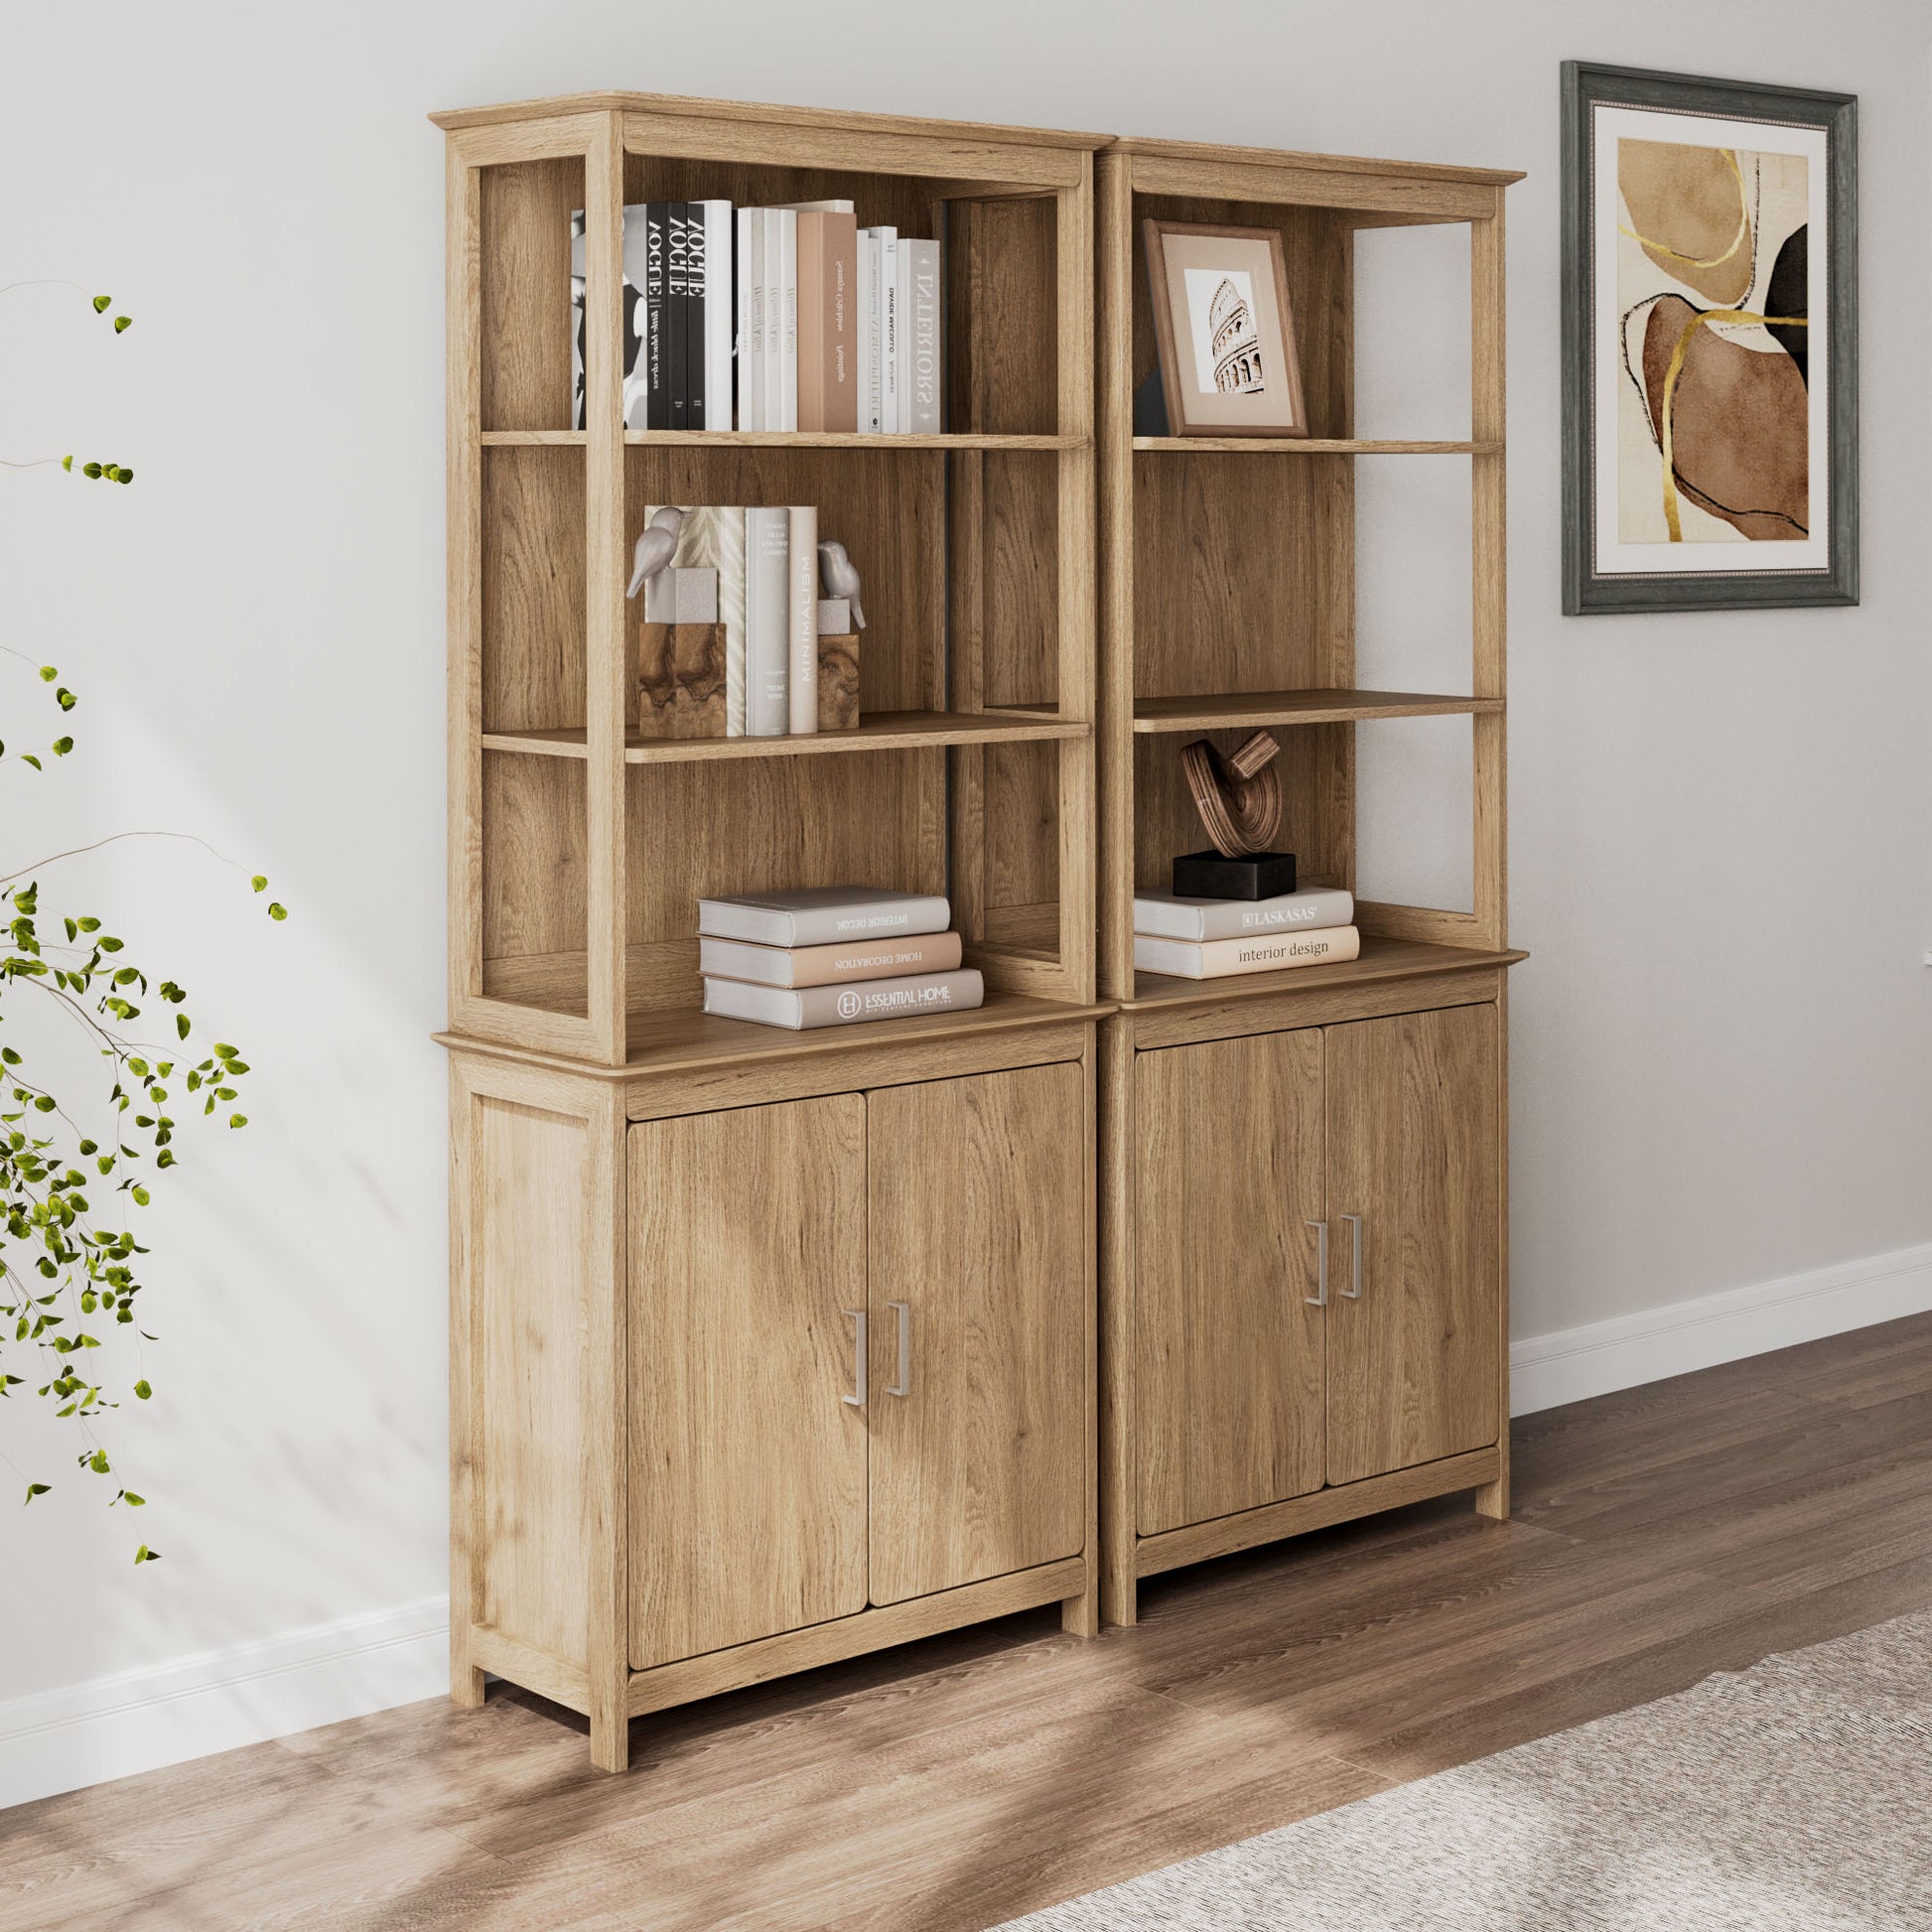 Eureka 77" storage cabinet bookshelf with Adjustable Shelves, oak